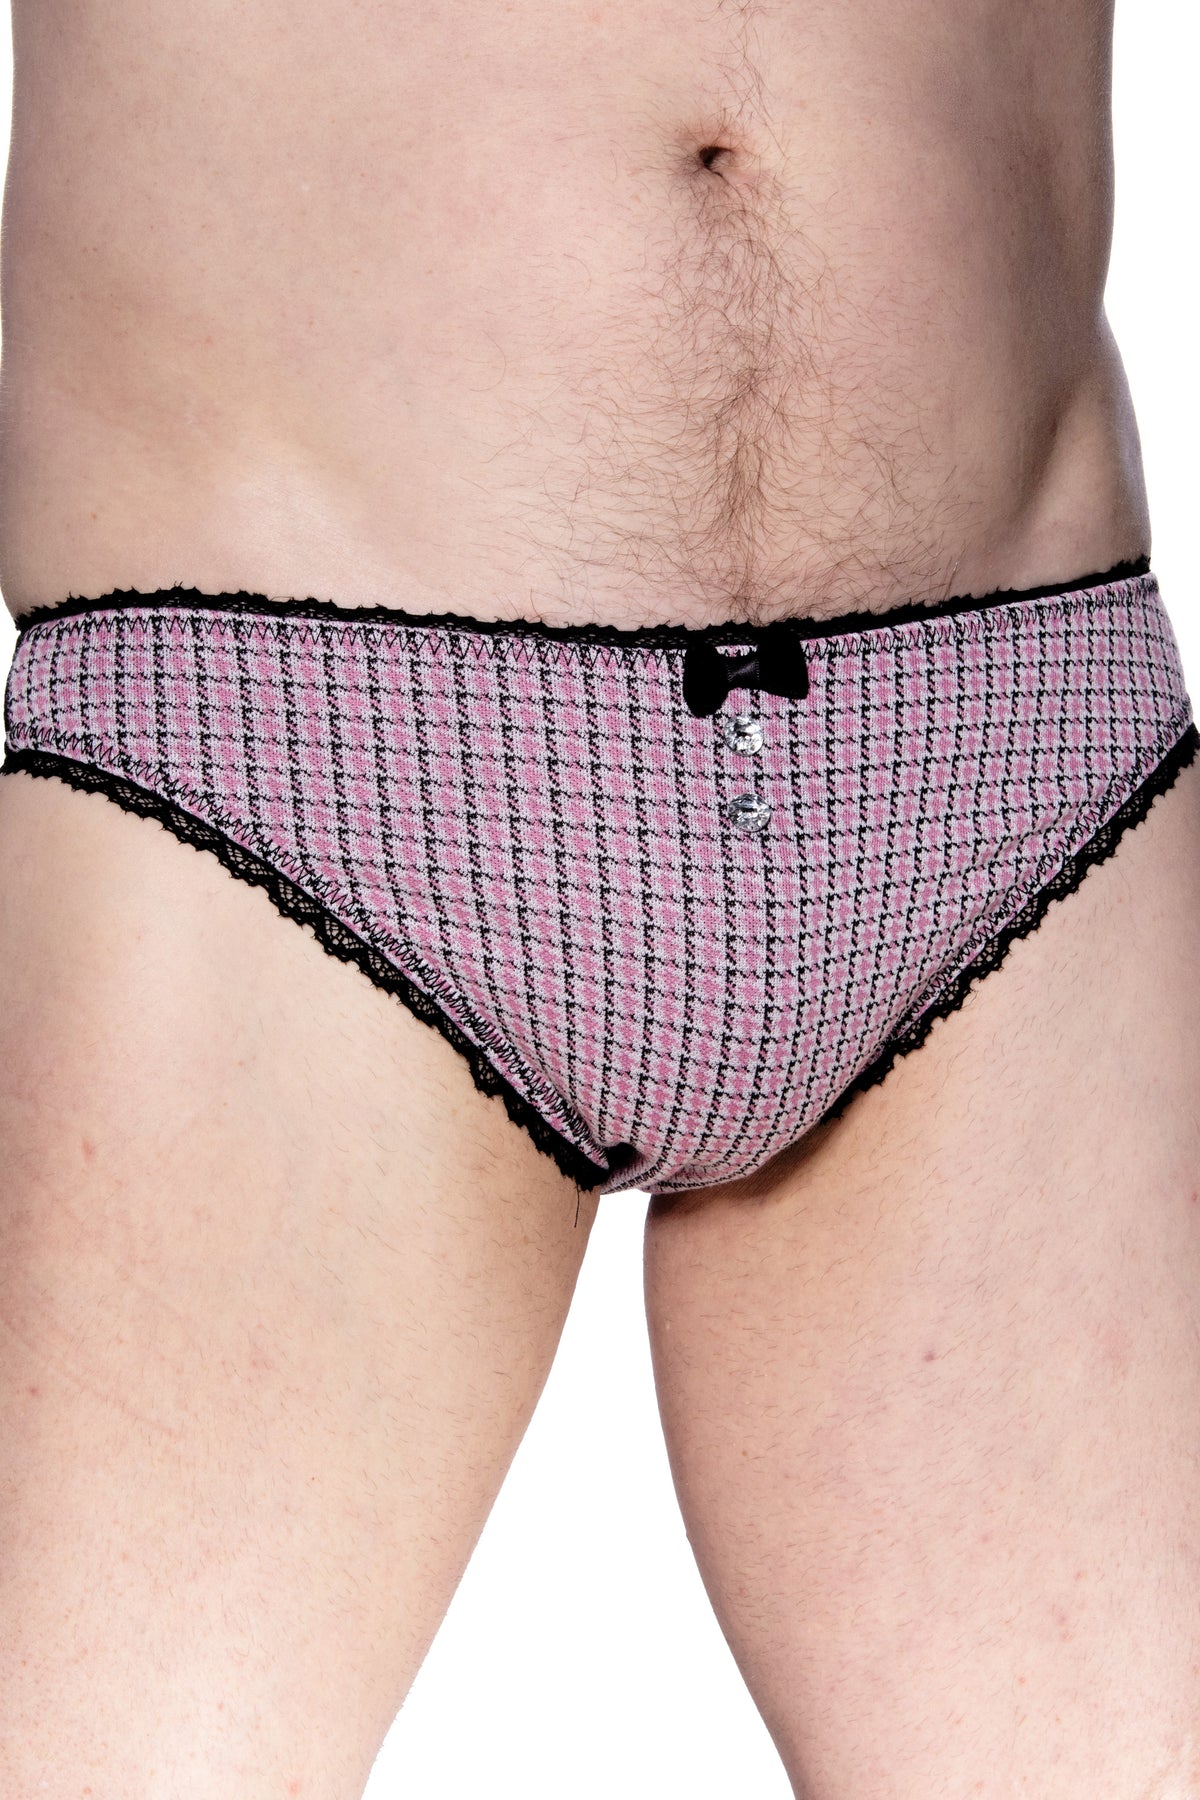 Fatale - Panties for men – Fatale Design